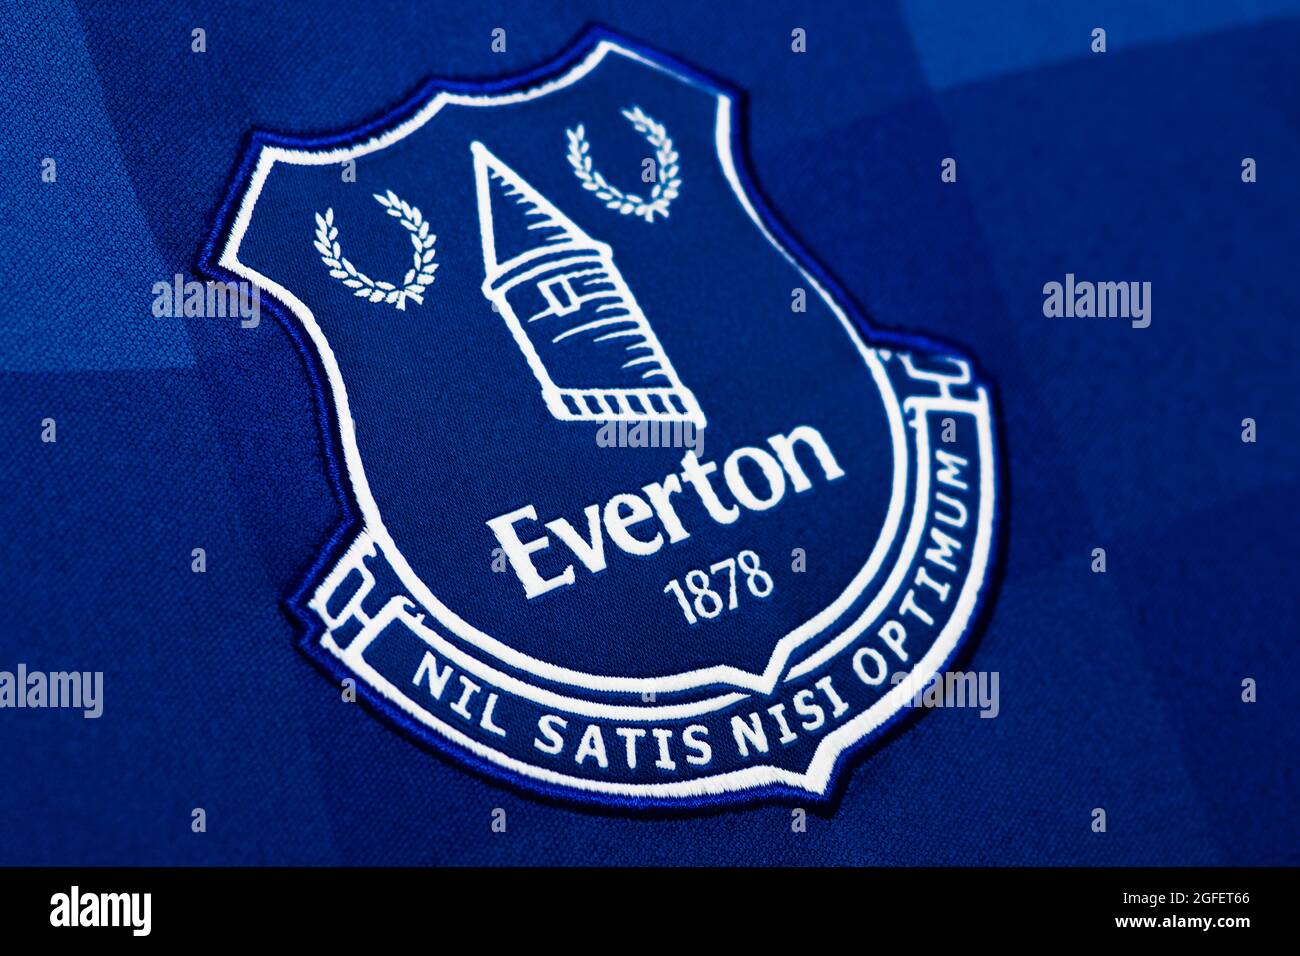 Close up of Everton FC kit 2020/21. Stock Photo